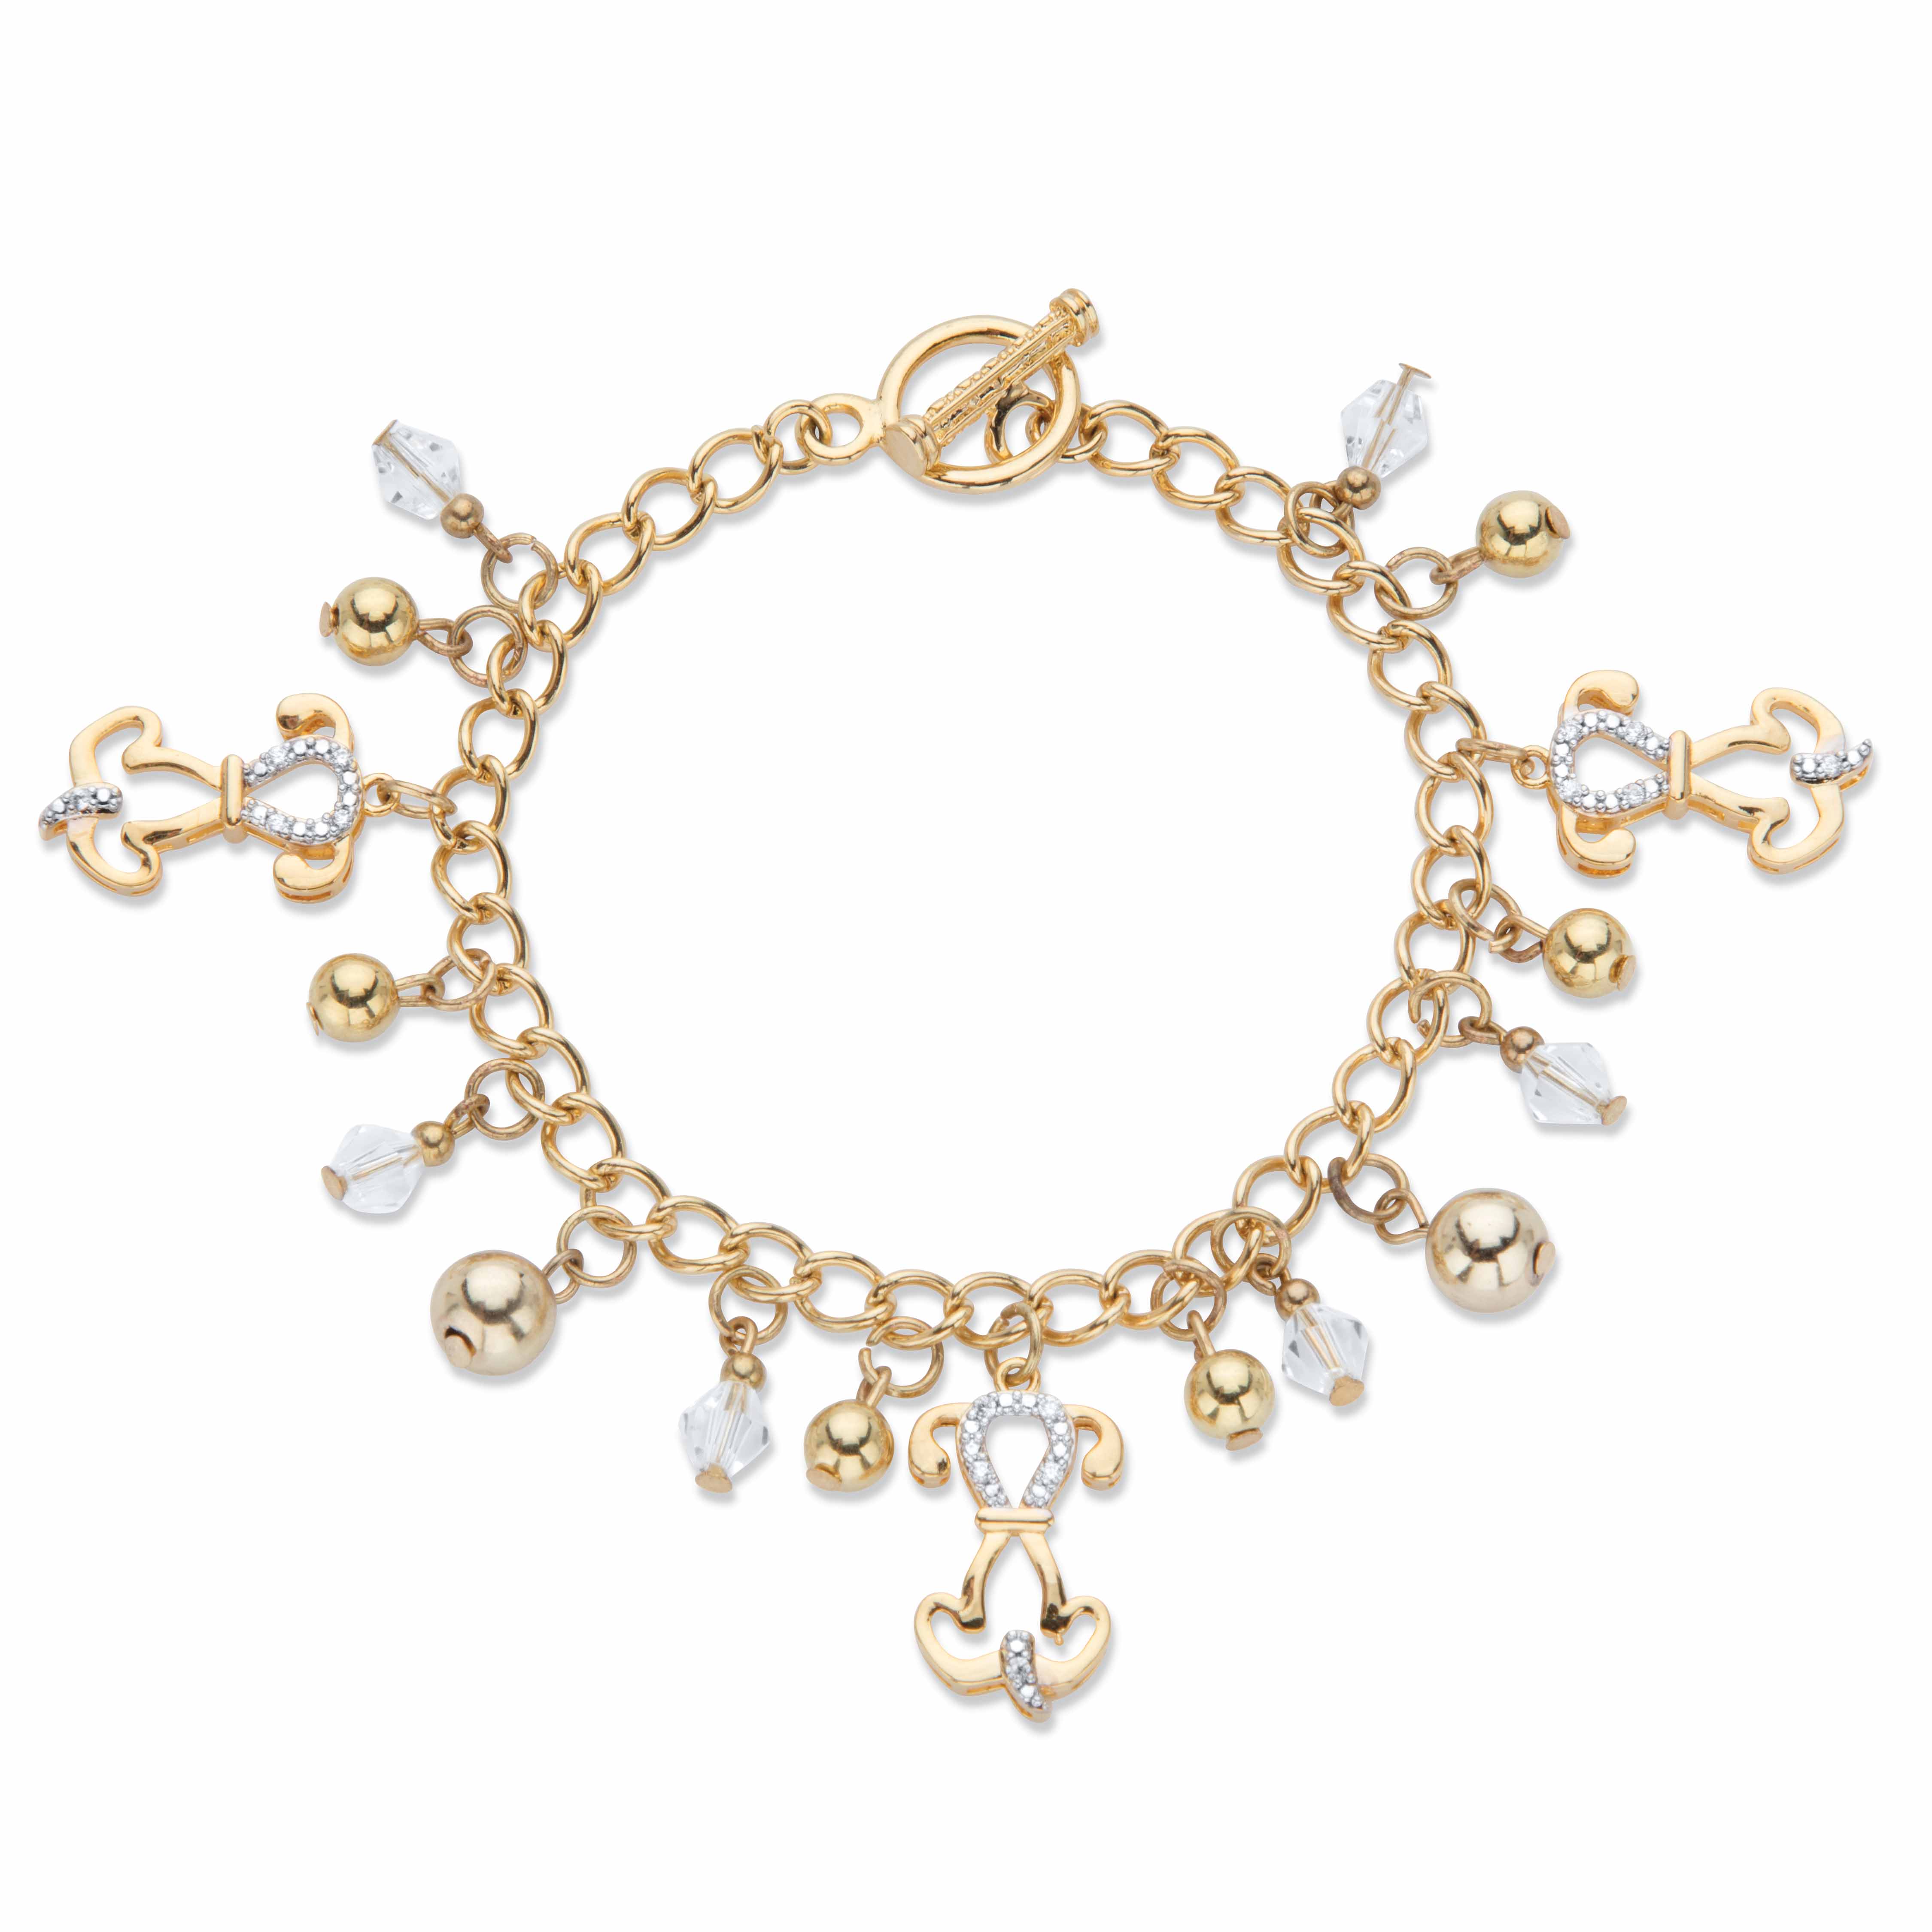 Round Goldtone Crystal Beaded Puppy Dog Charm Bracelet 7.5